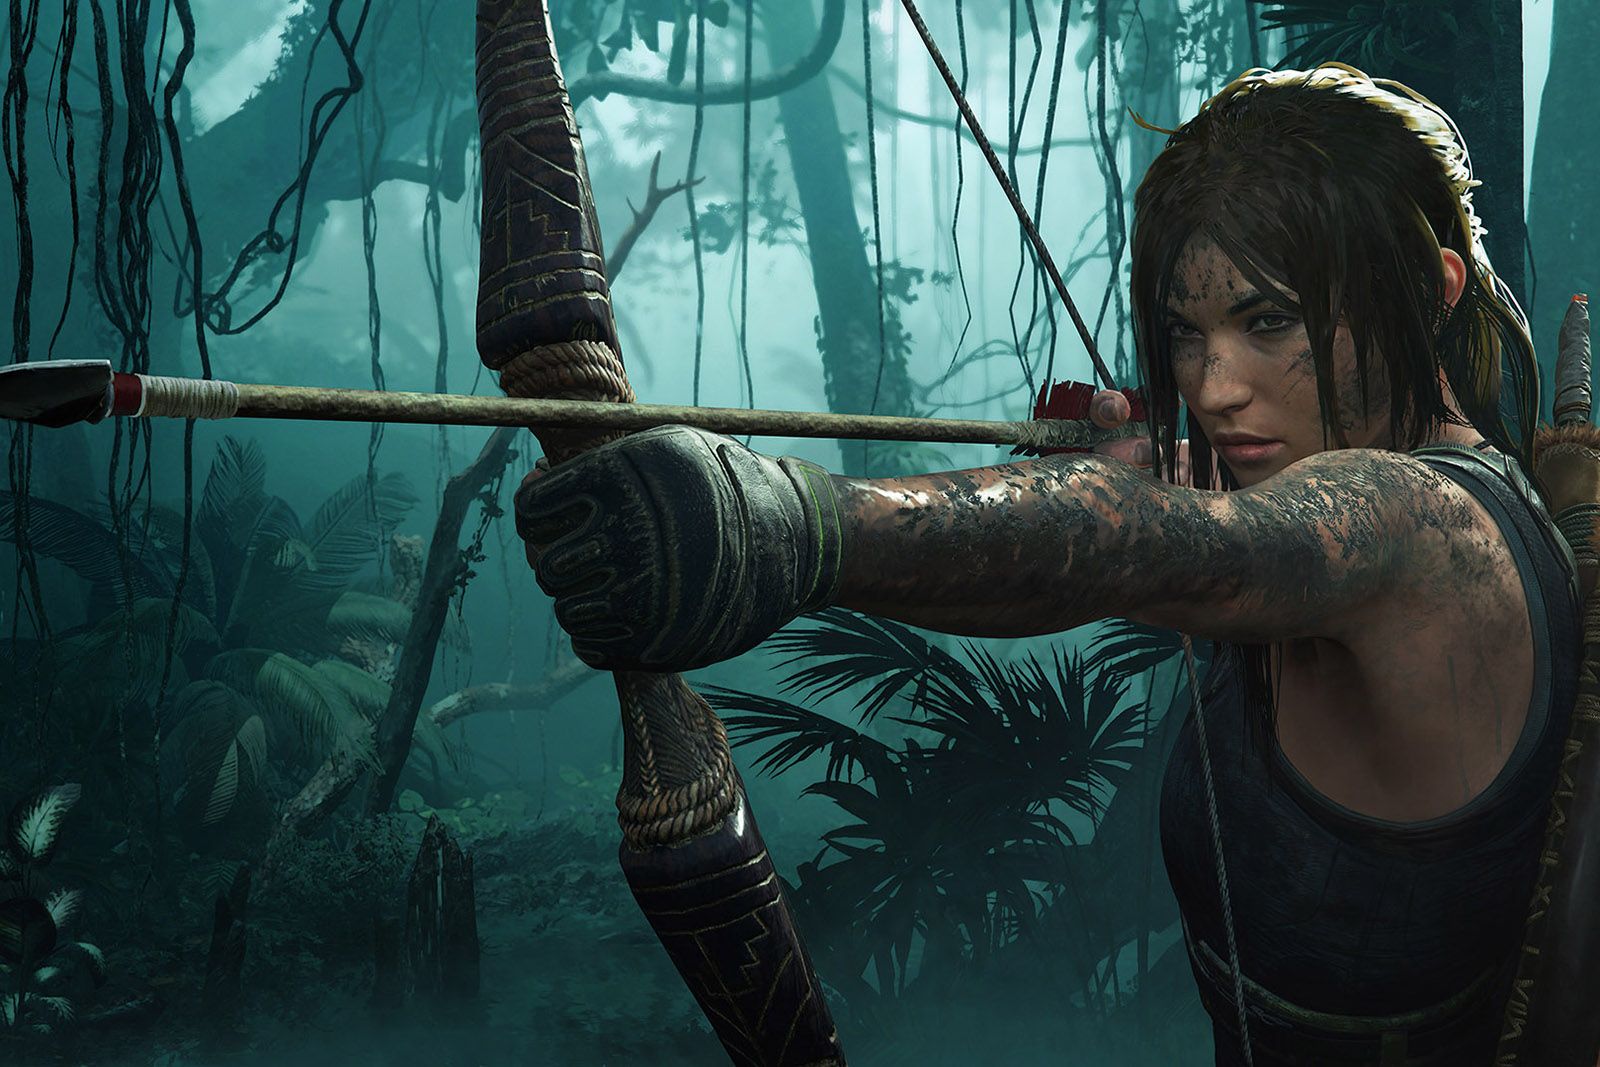 Tomb Raider's Lara Croft with a bow and arrow